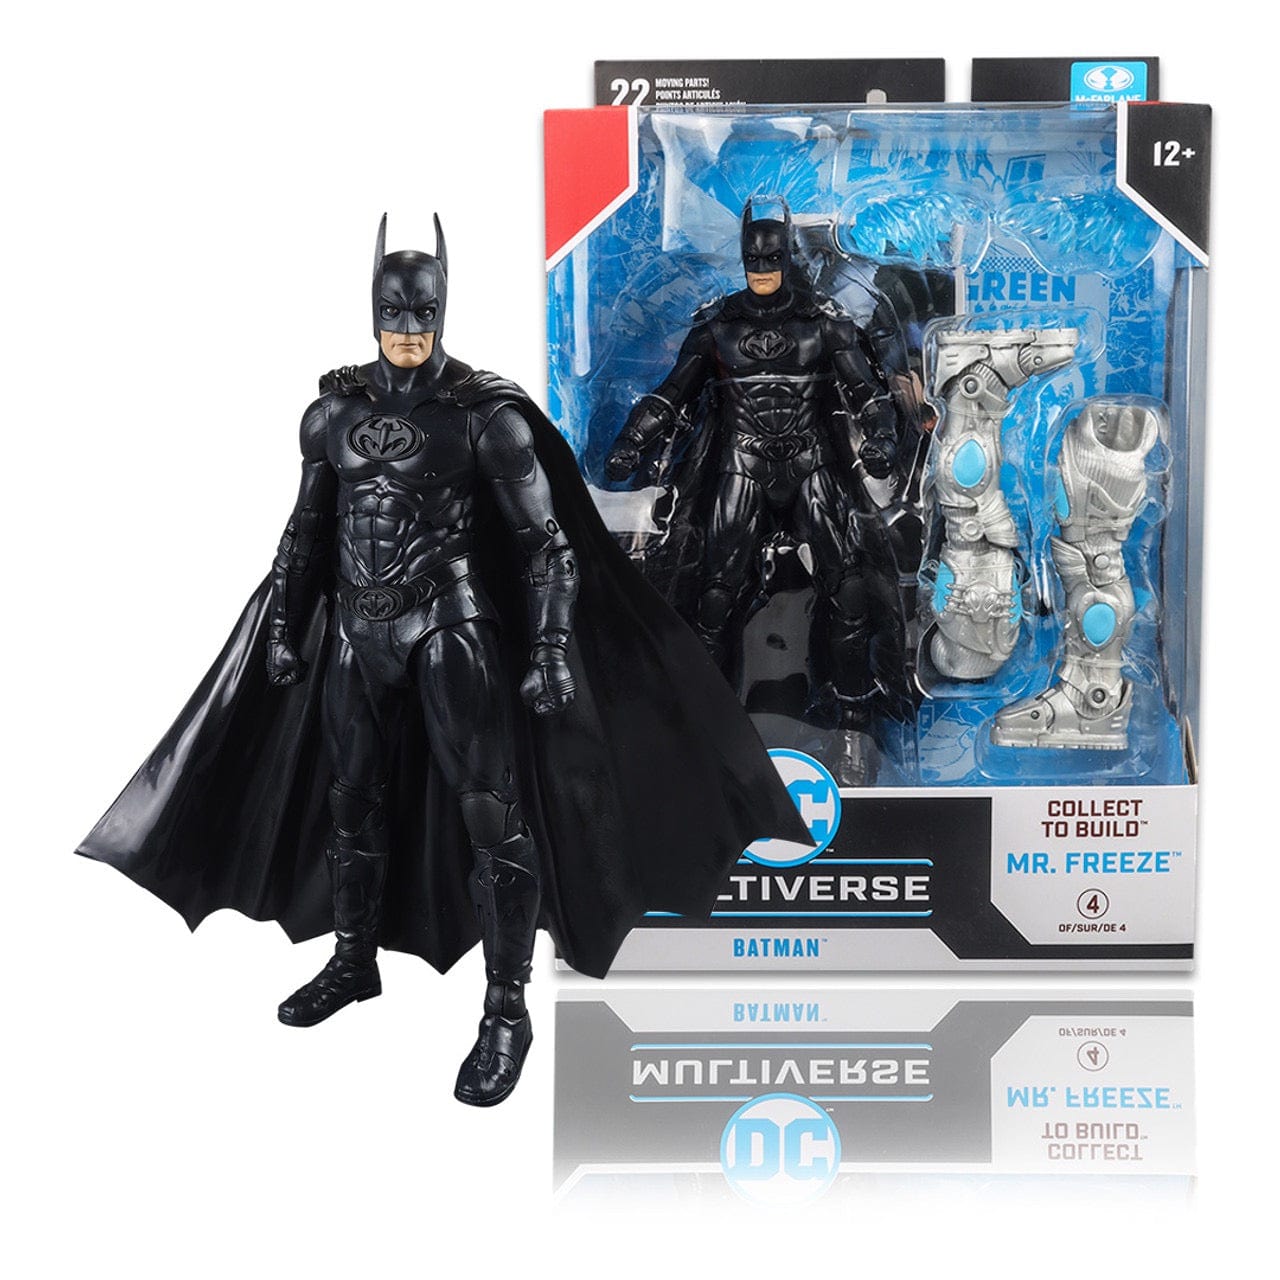 McFarlane Toys DC Multiverse Batman & Robin Movie Set (Mr. Freeze Build-A Figure)